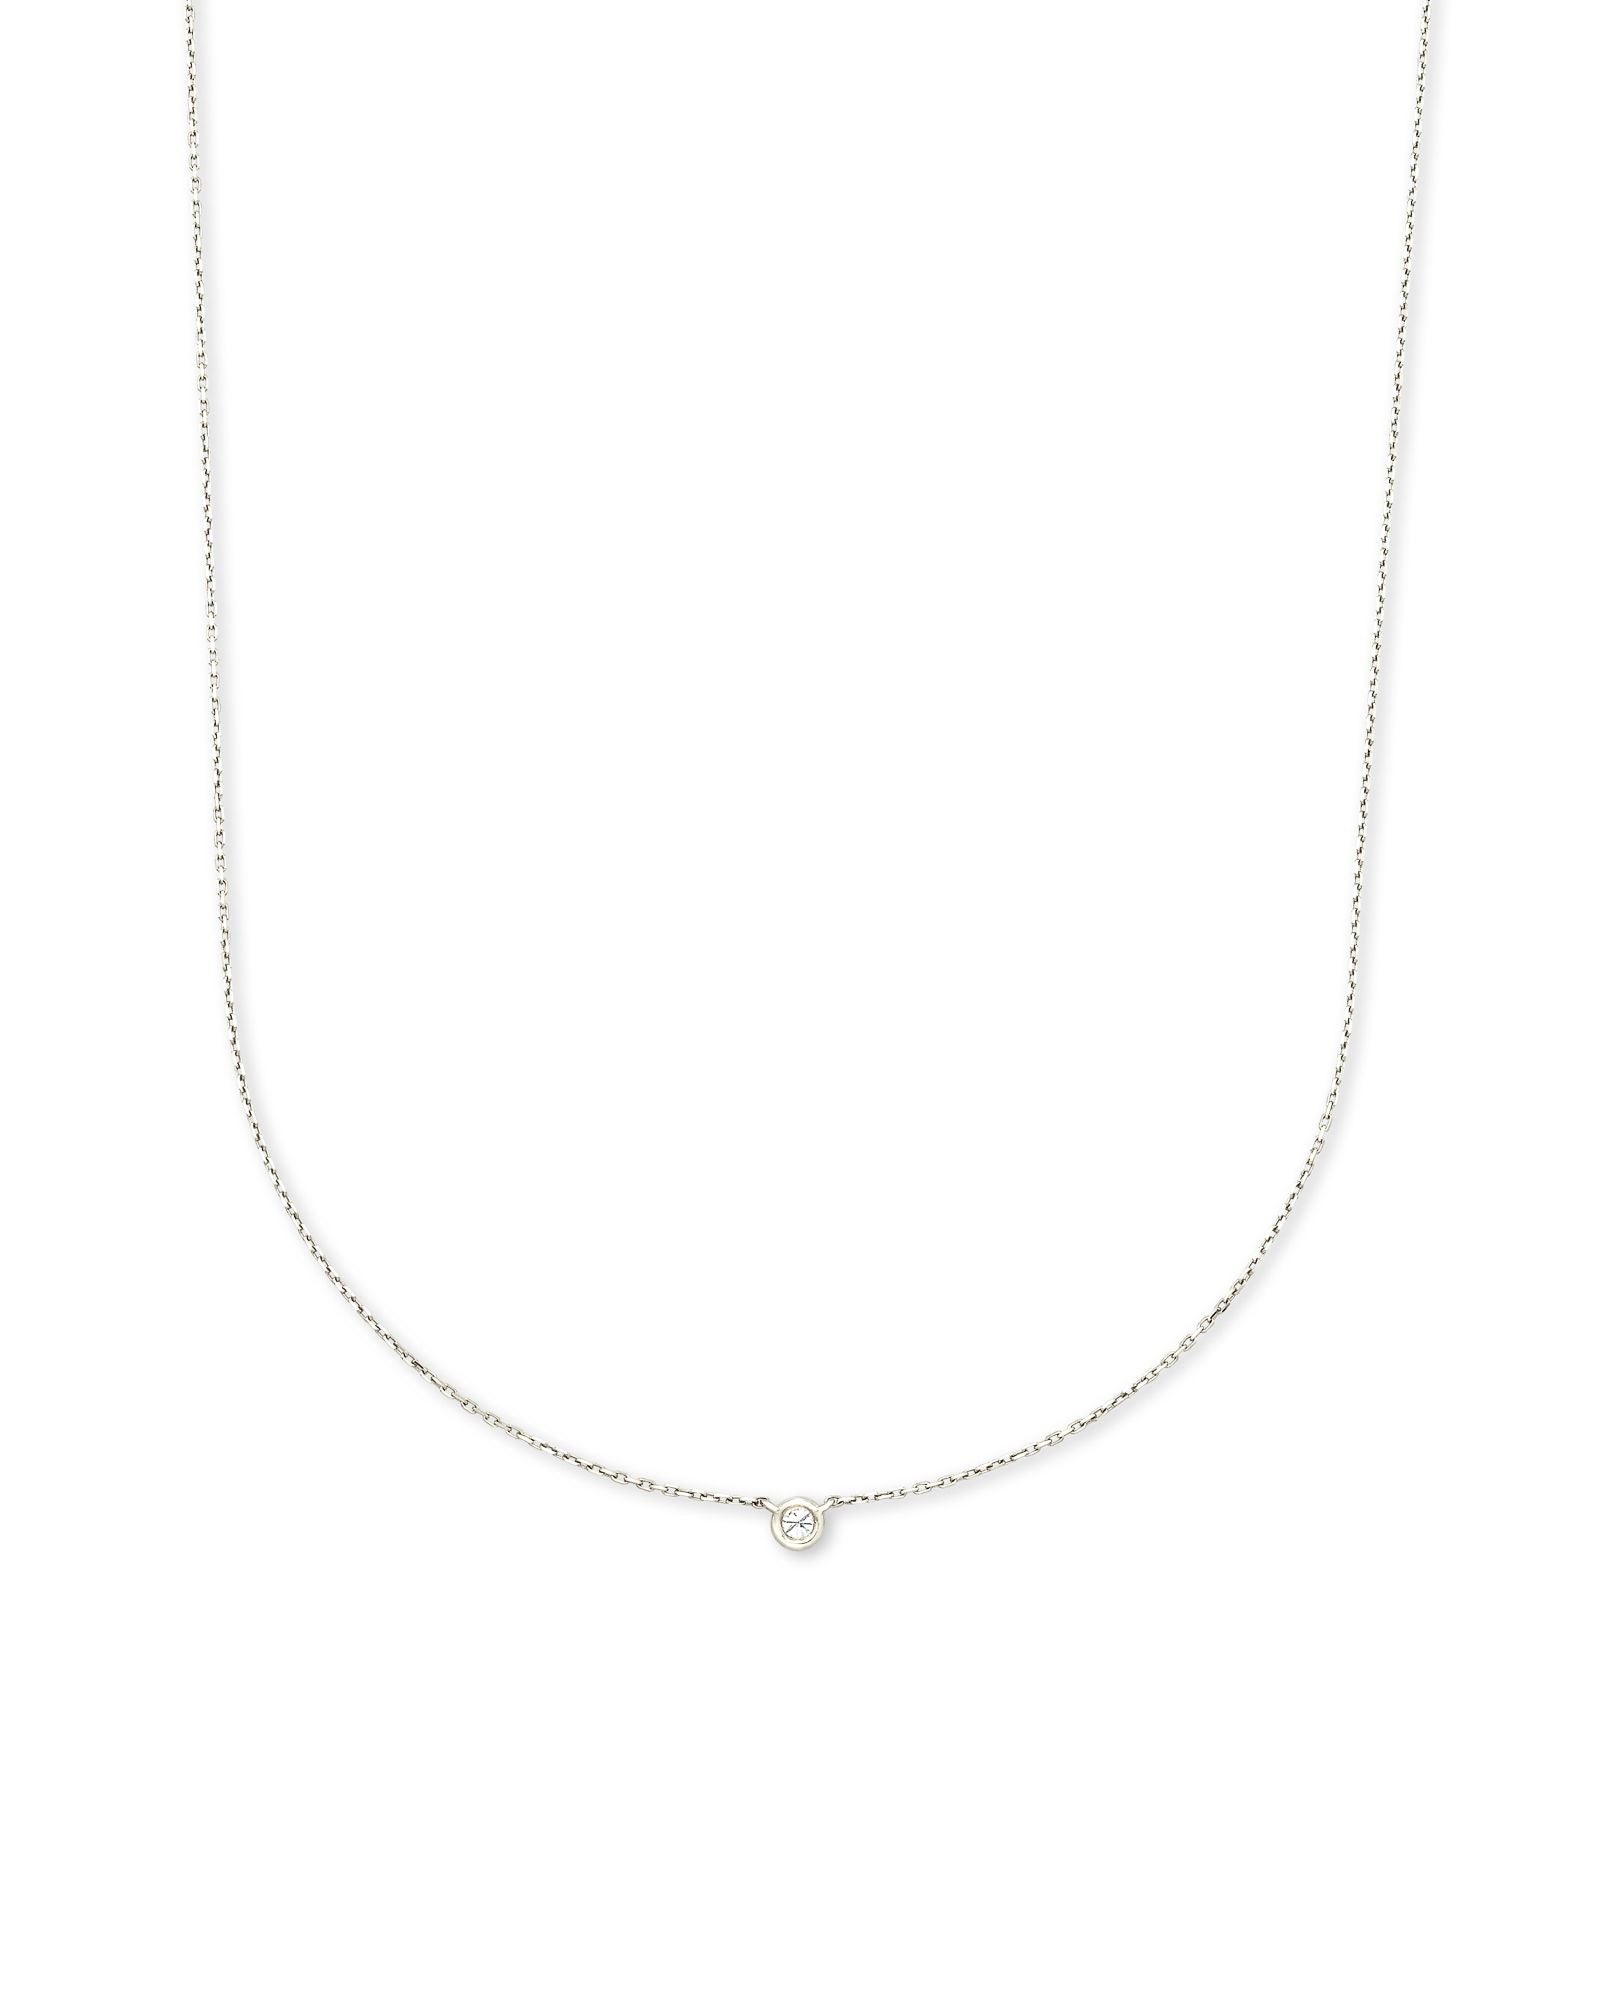 Kendra Scott Audrey Pendant Necklace 14K White Gold White Diamond-Necklaces-Kendra Scott-Max Retail, N1571WGD-The Twisted Chandelier